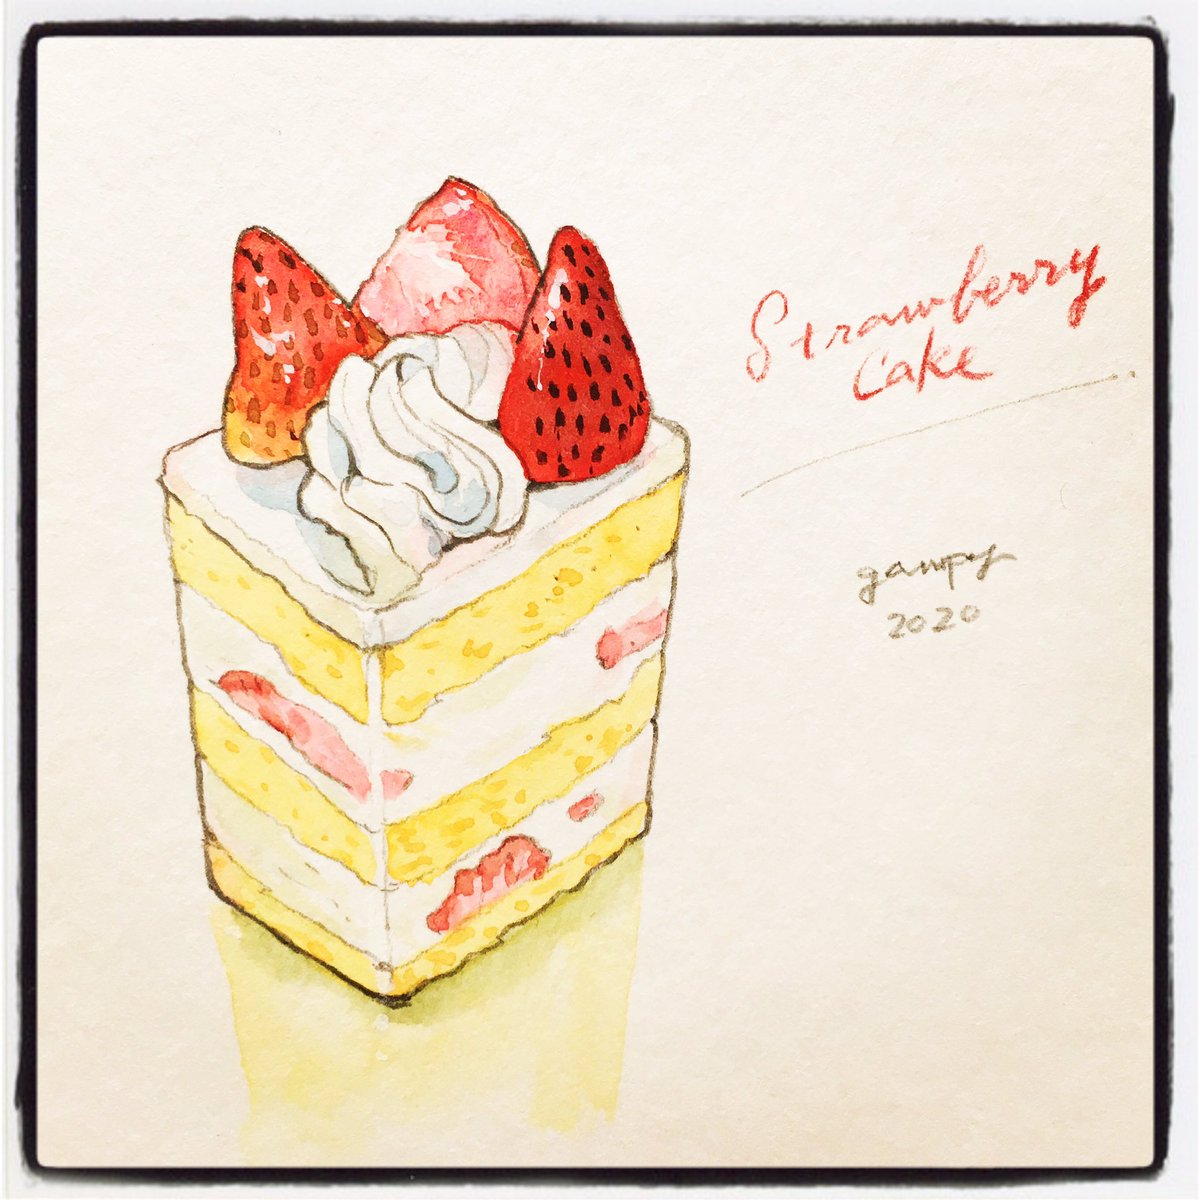 完成?

#strawberrycake
#watercolor 